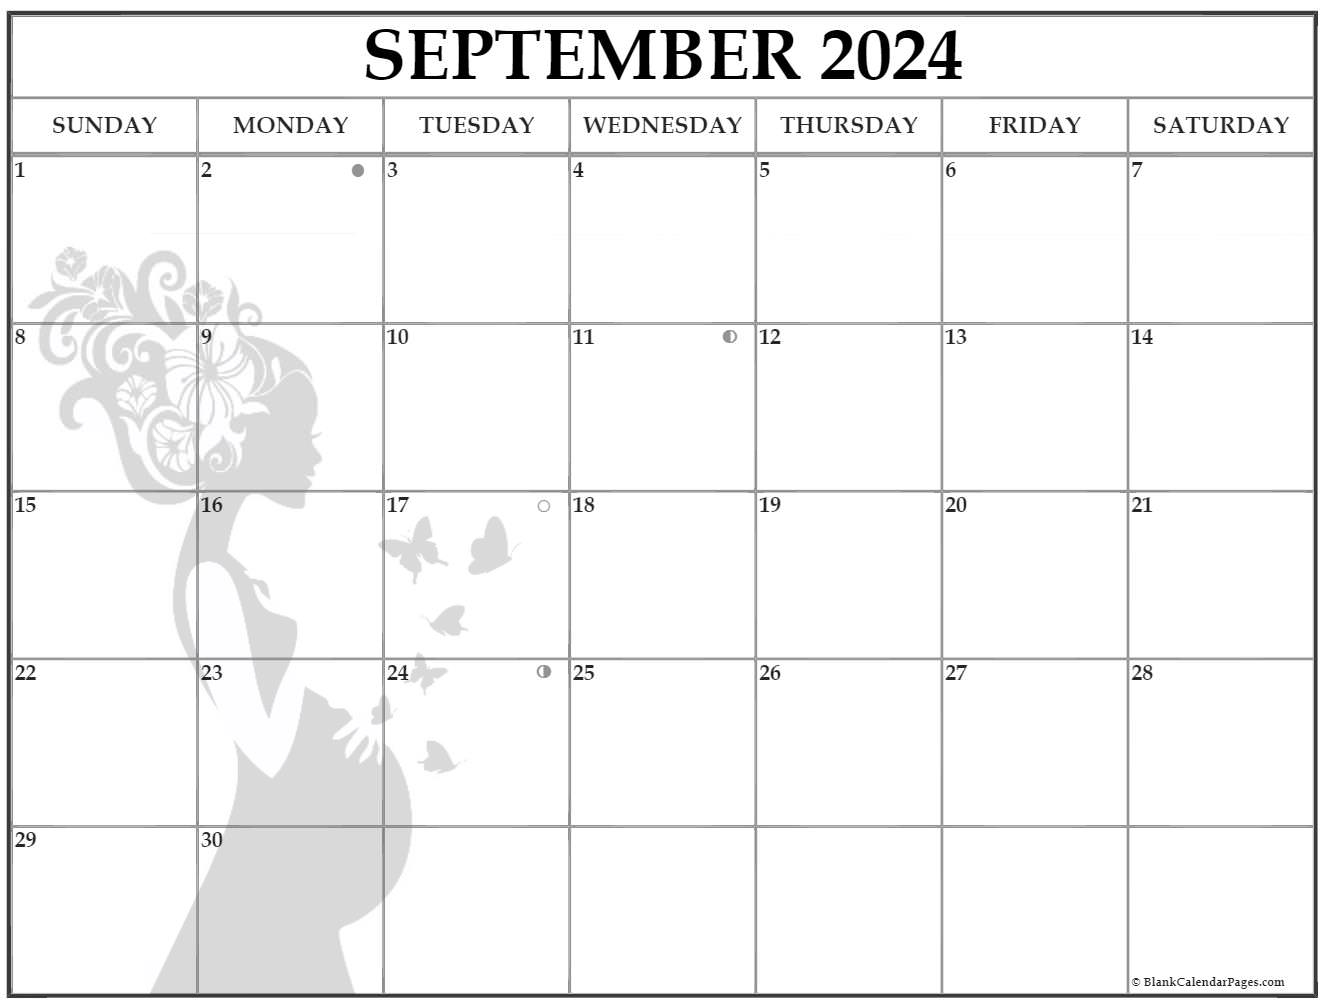 September 2021 Pregnancy Calendar | Fertility Calendar